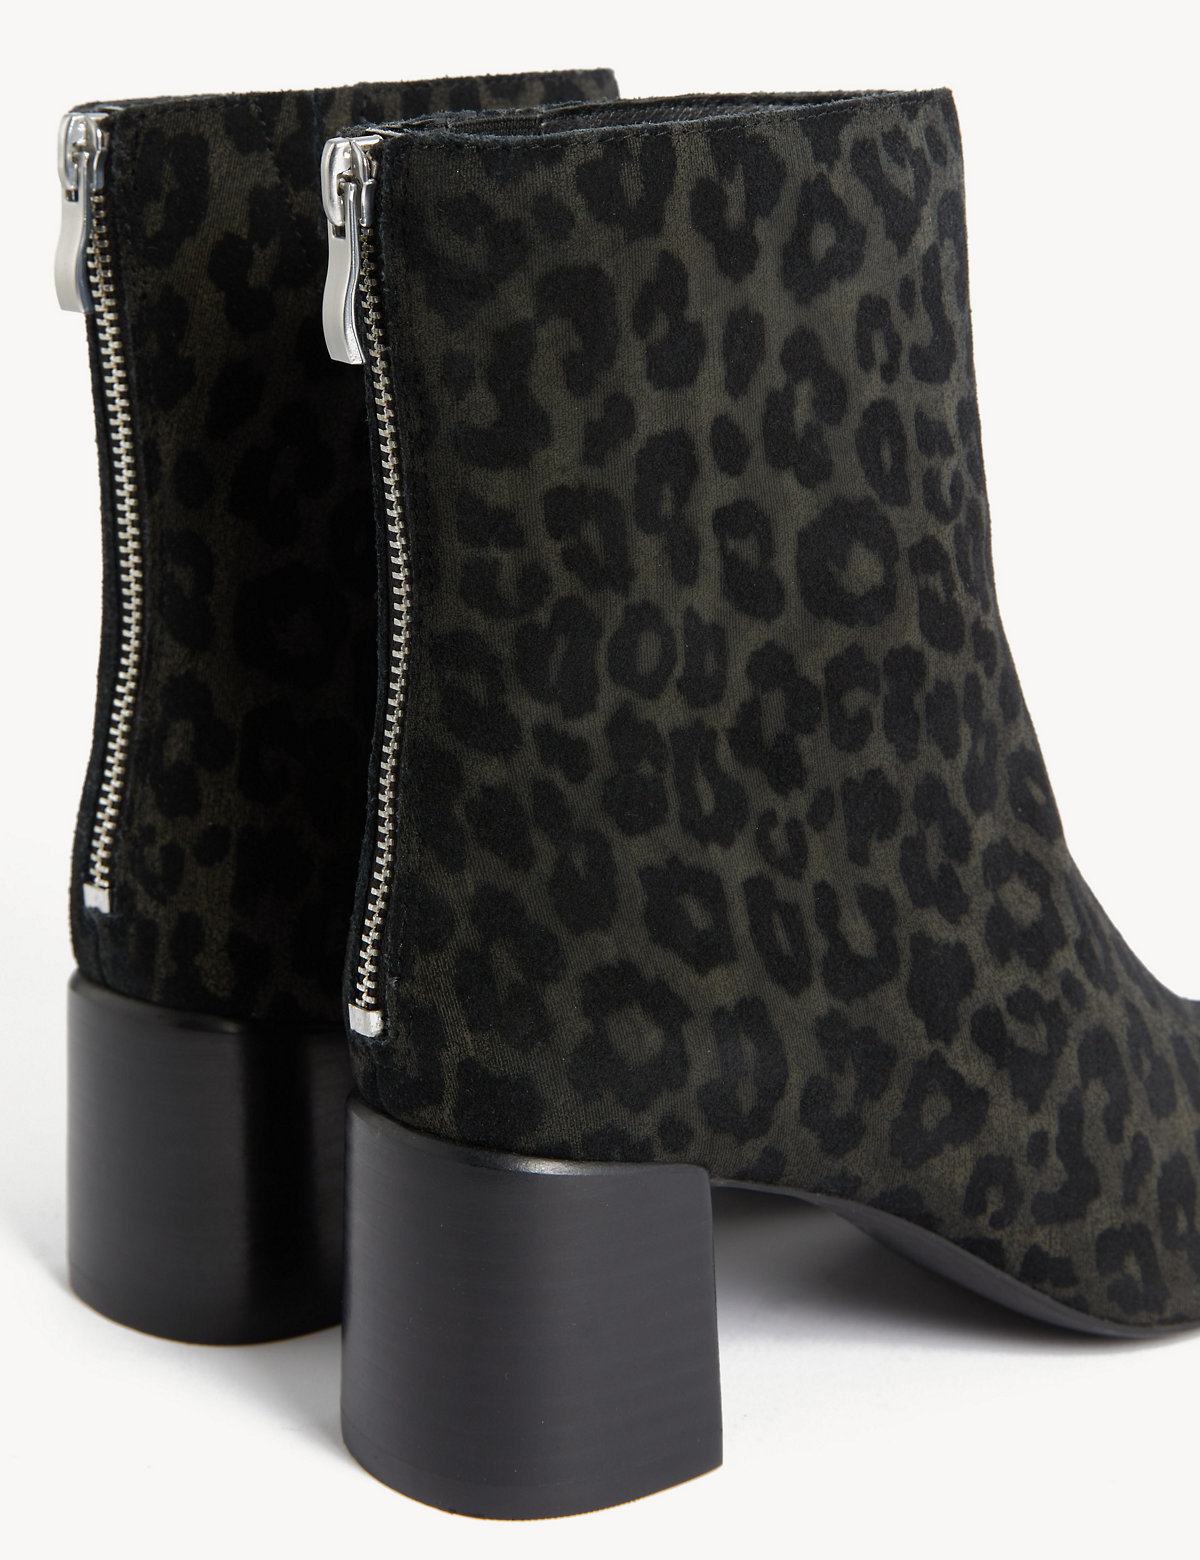 Suede Leopard Print Block Heel Ankle Boots